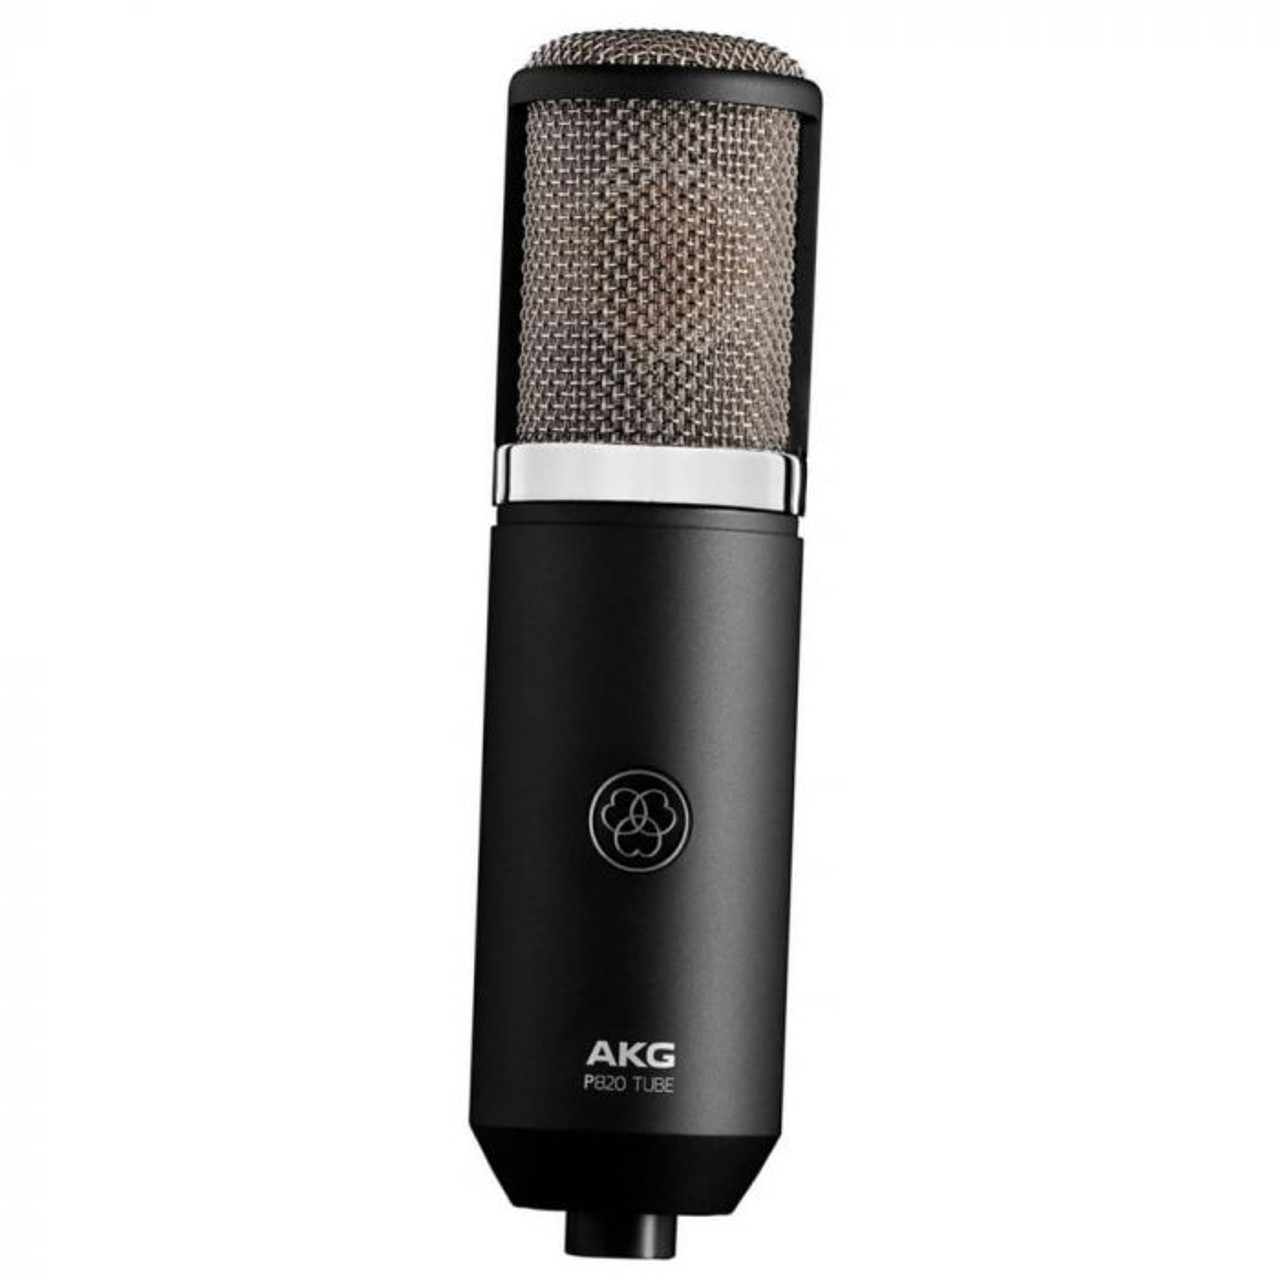 AKG P820 Tube Dual-Capsule Tube Microphone